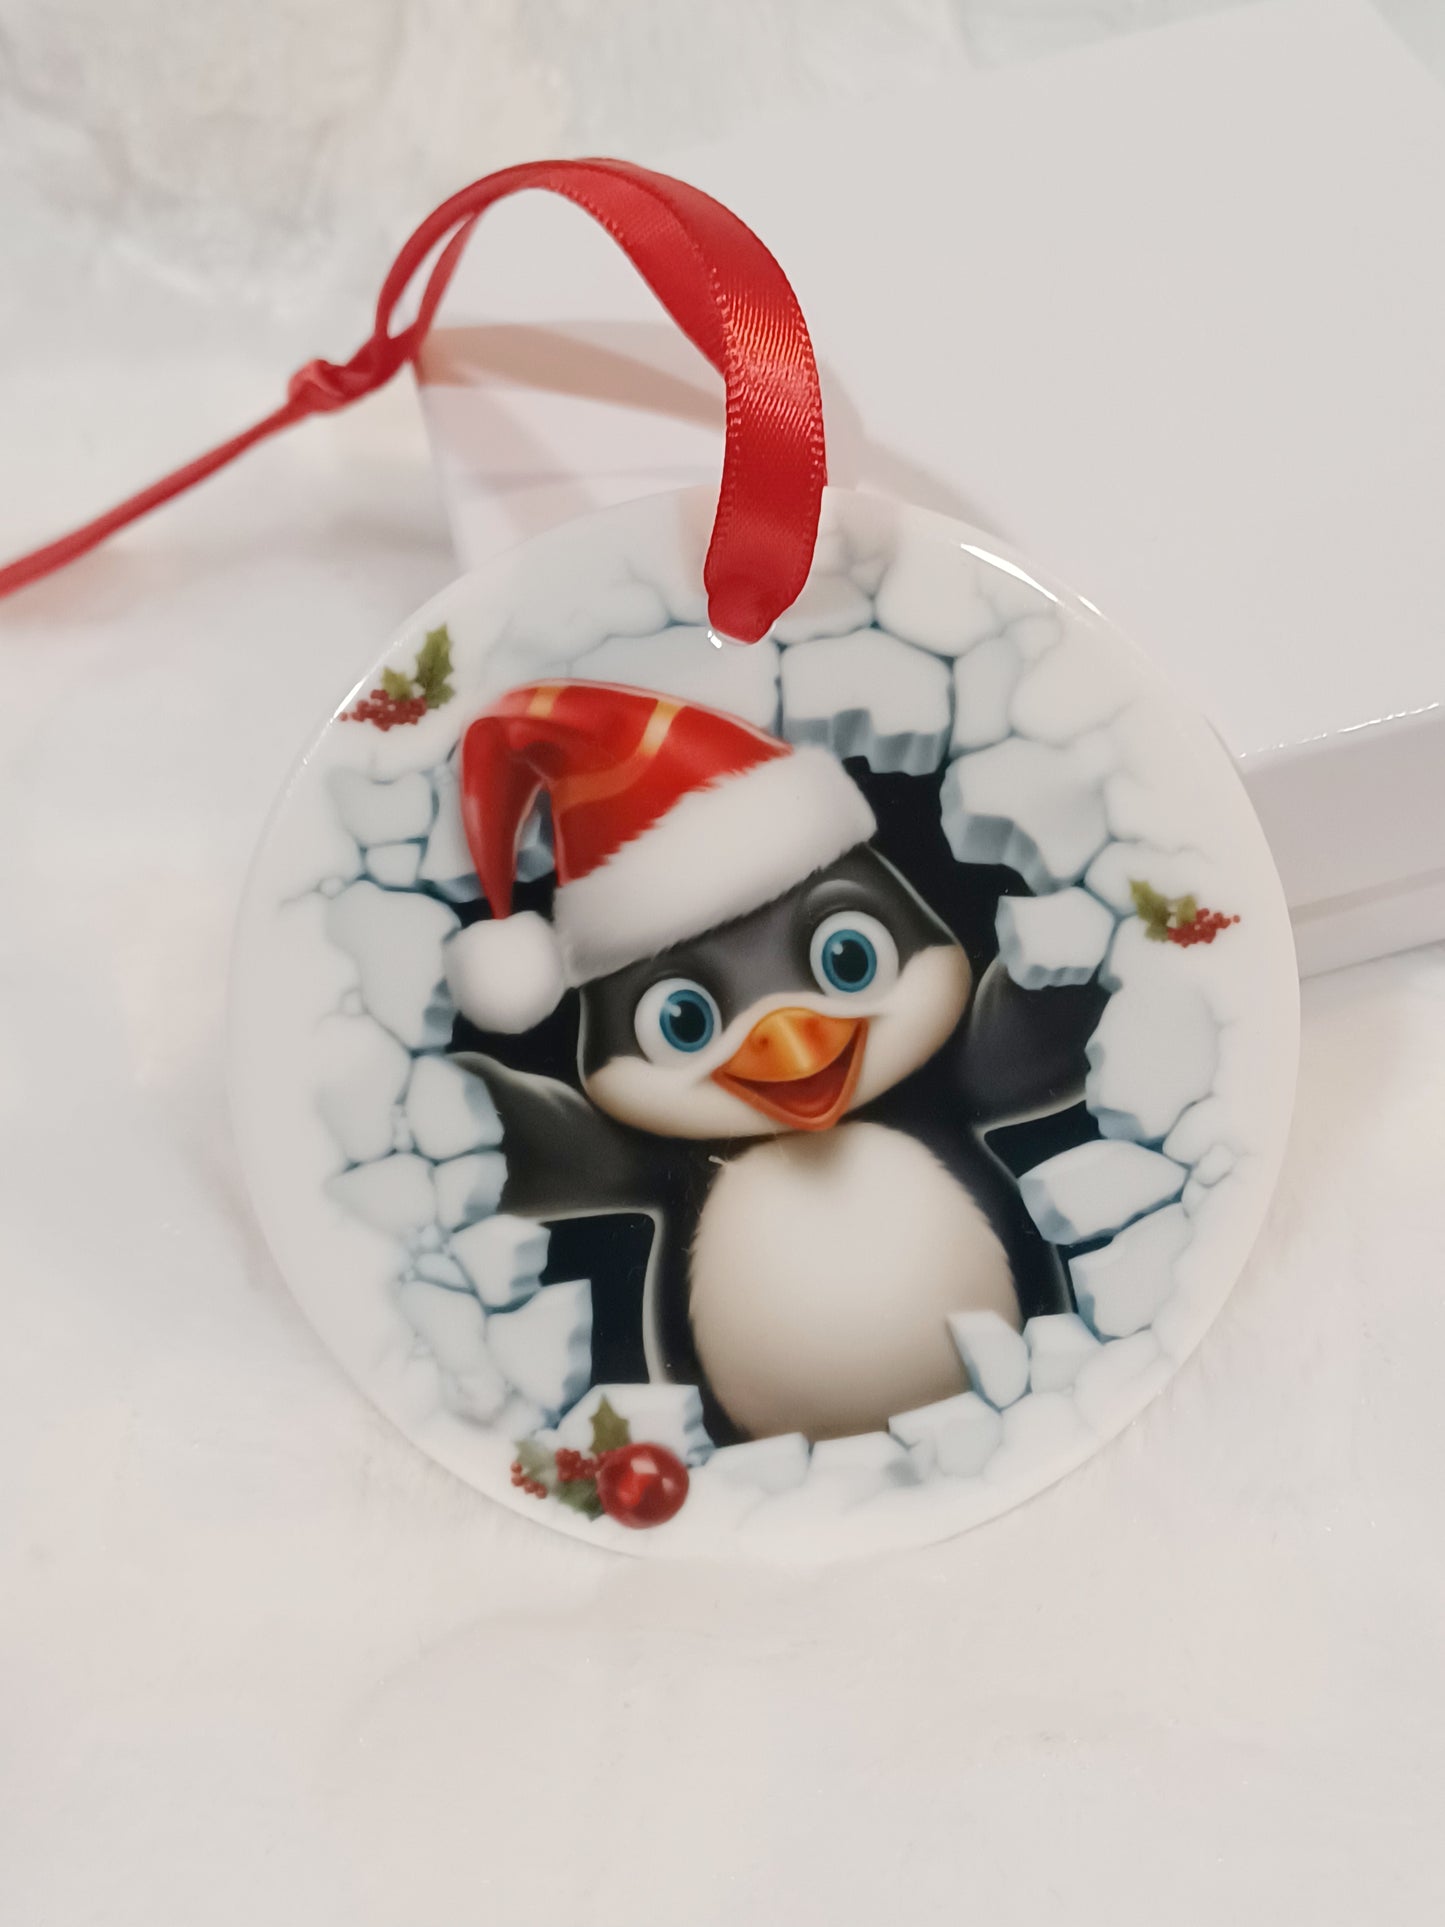 3D Ceramic Penguin Ornament, Handmade, Adorable Penguin Christmas Ornament